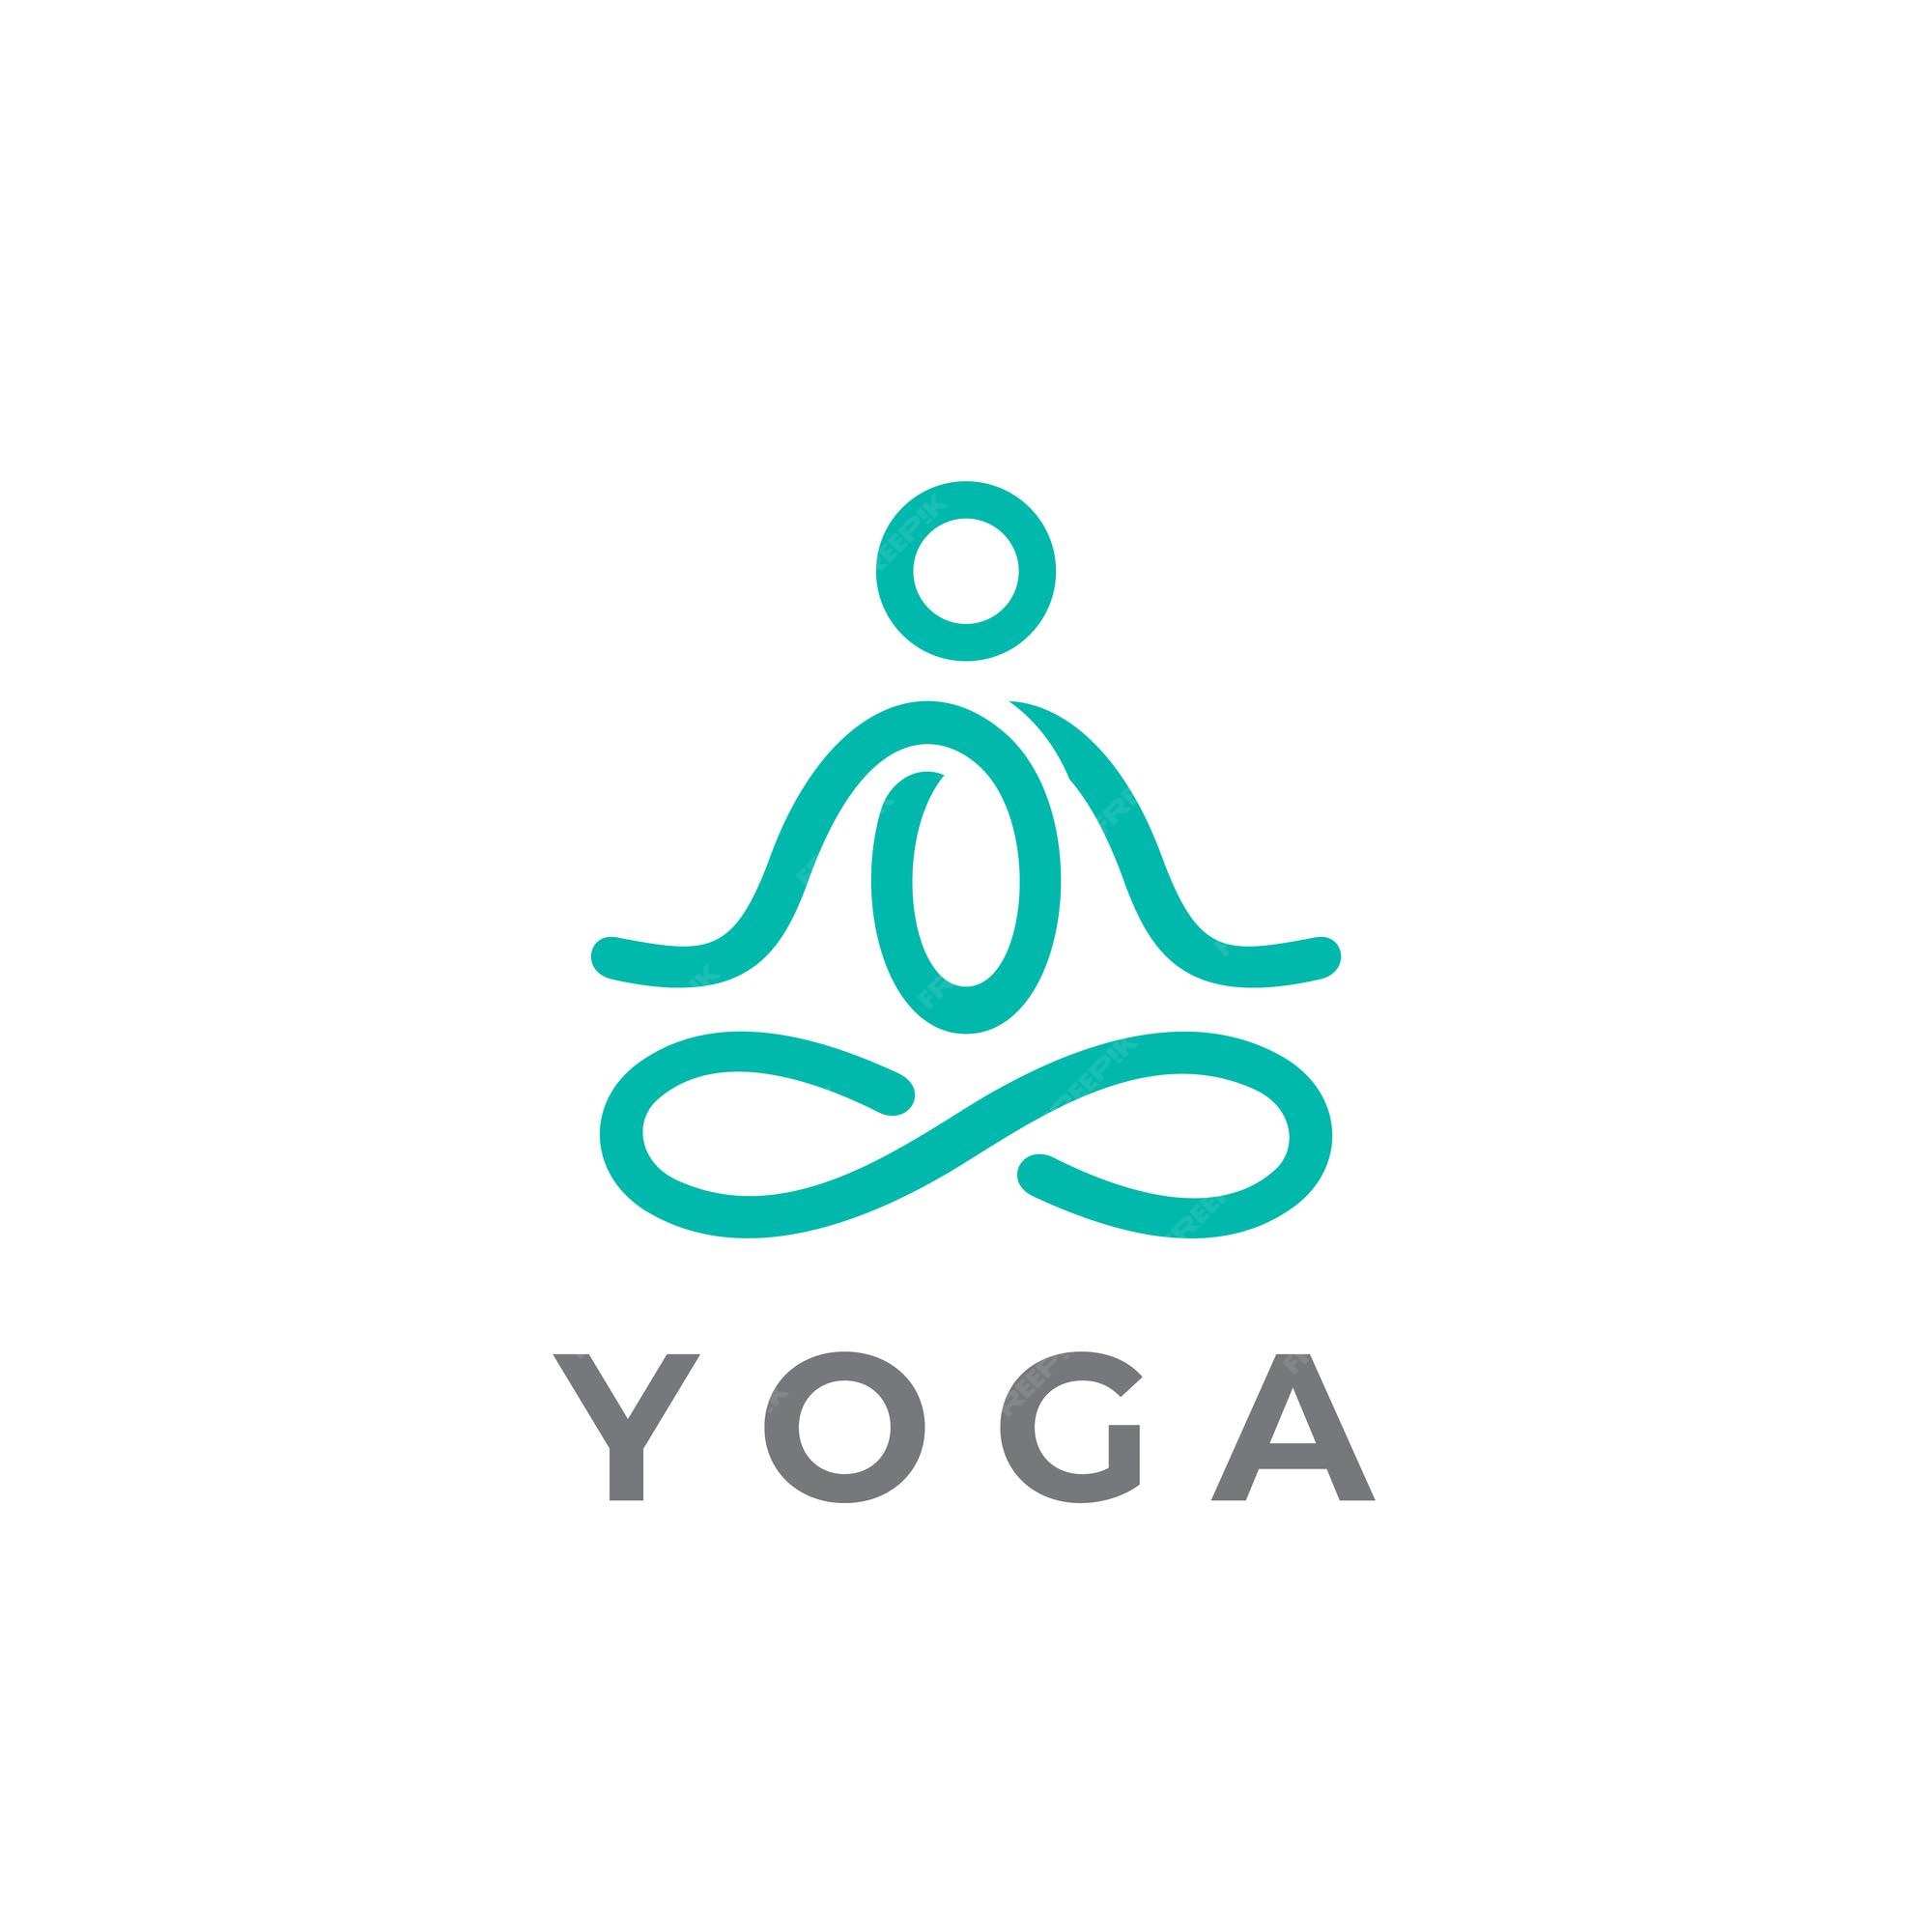 Premium Vector | Infinity yoga vector logo template